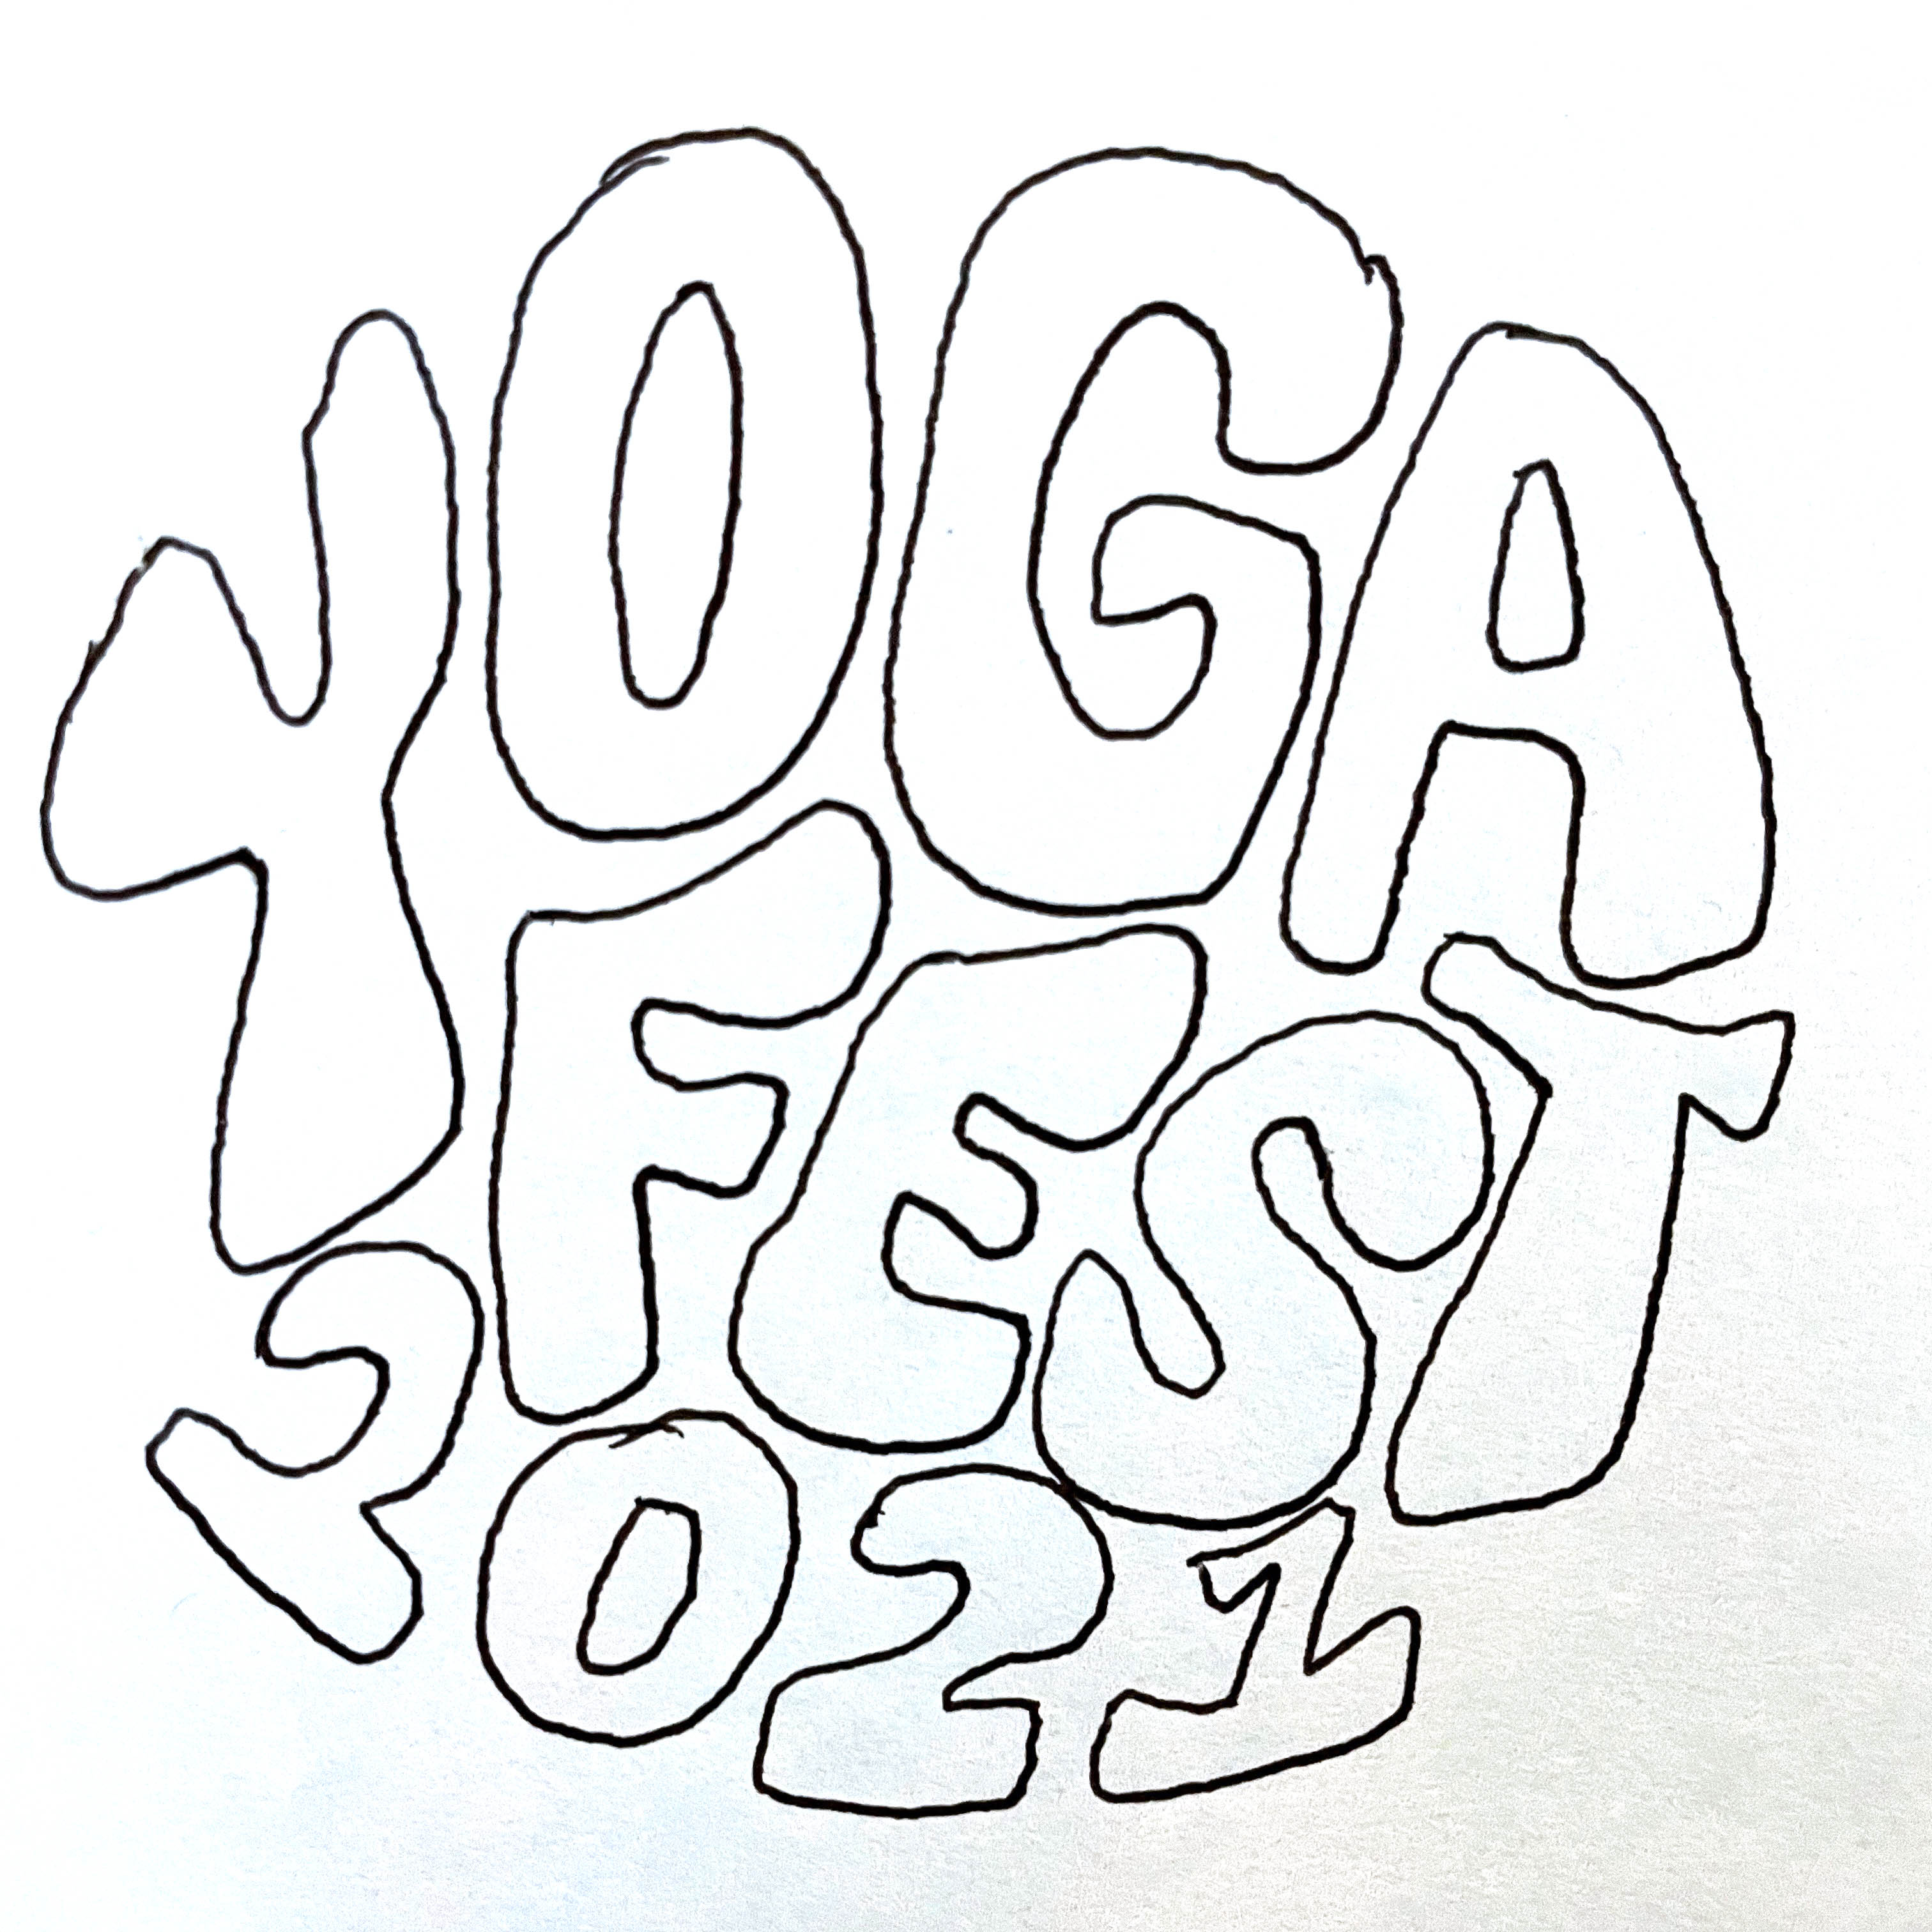 Sketch of groovy YogaFest design